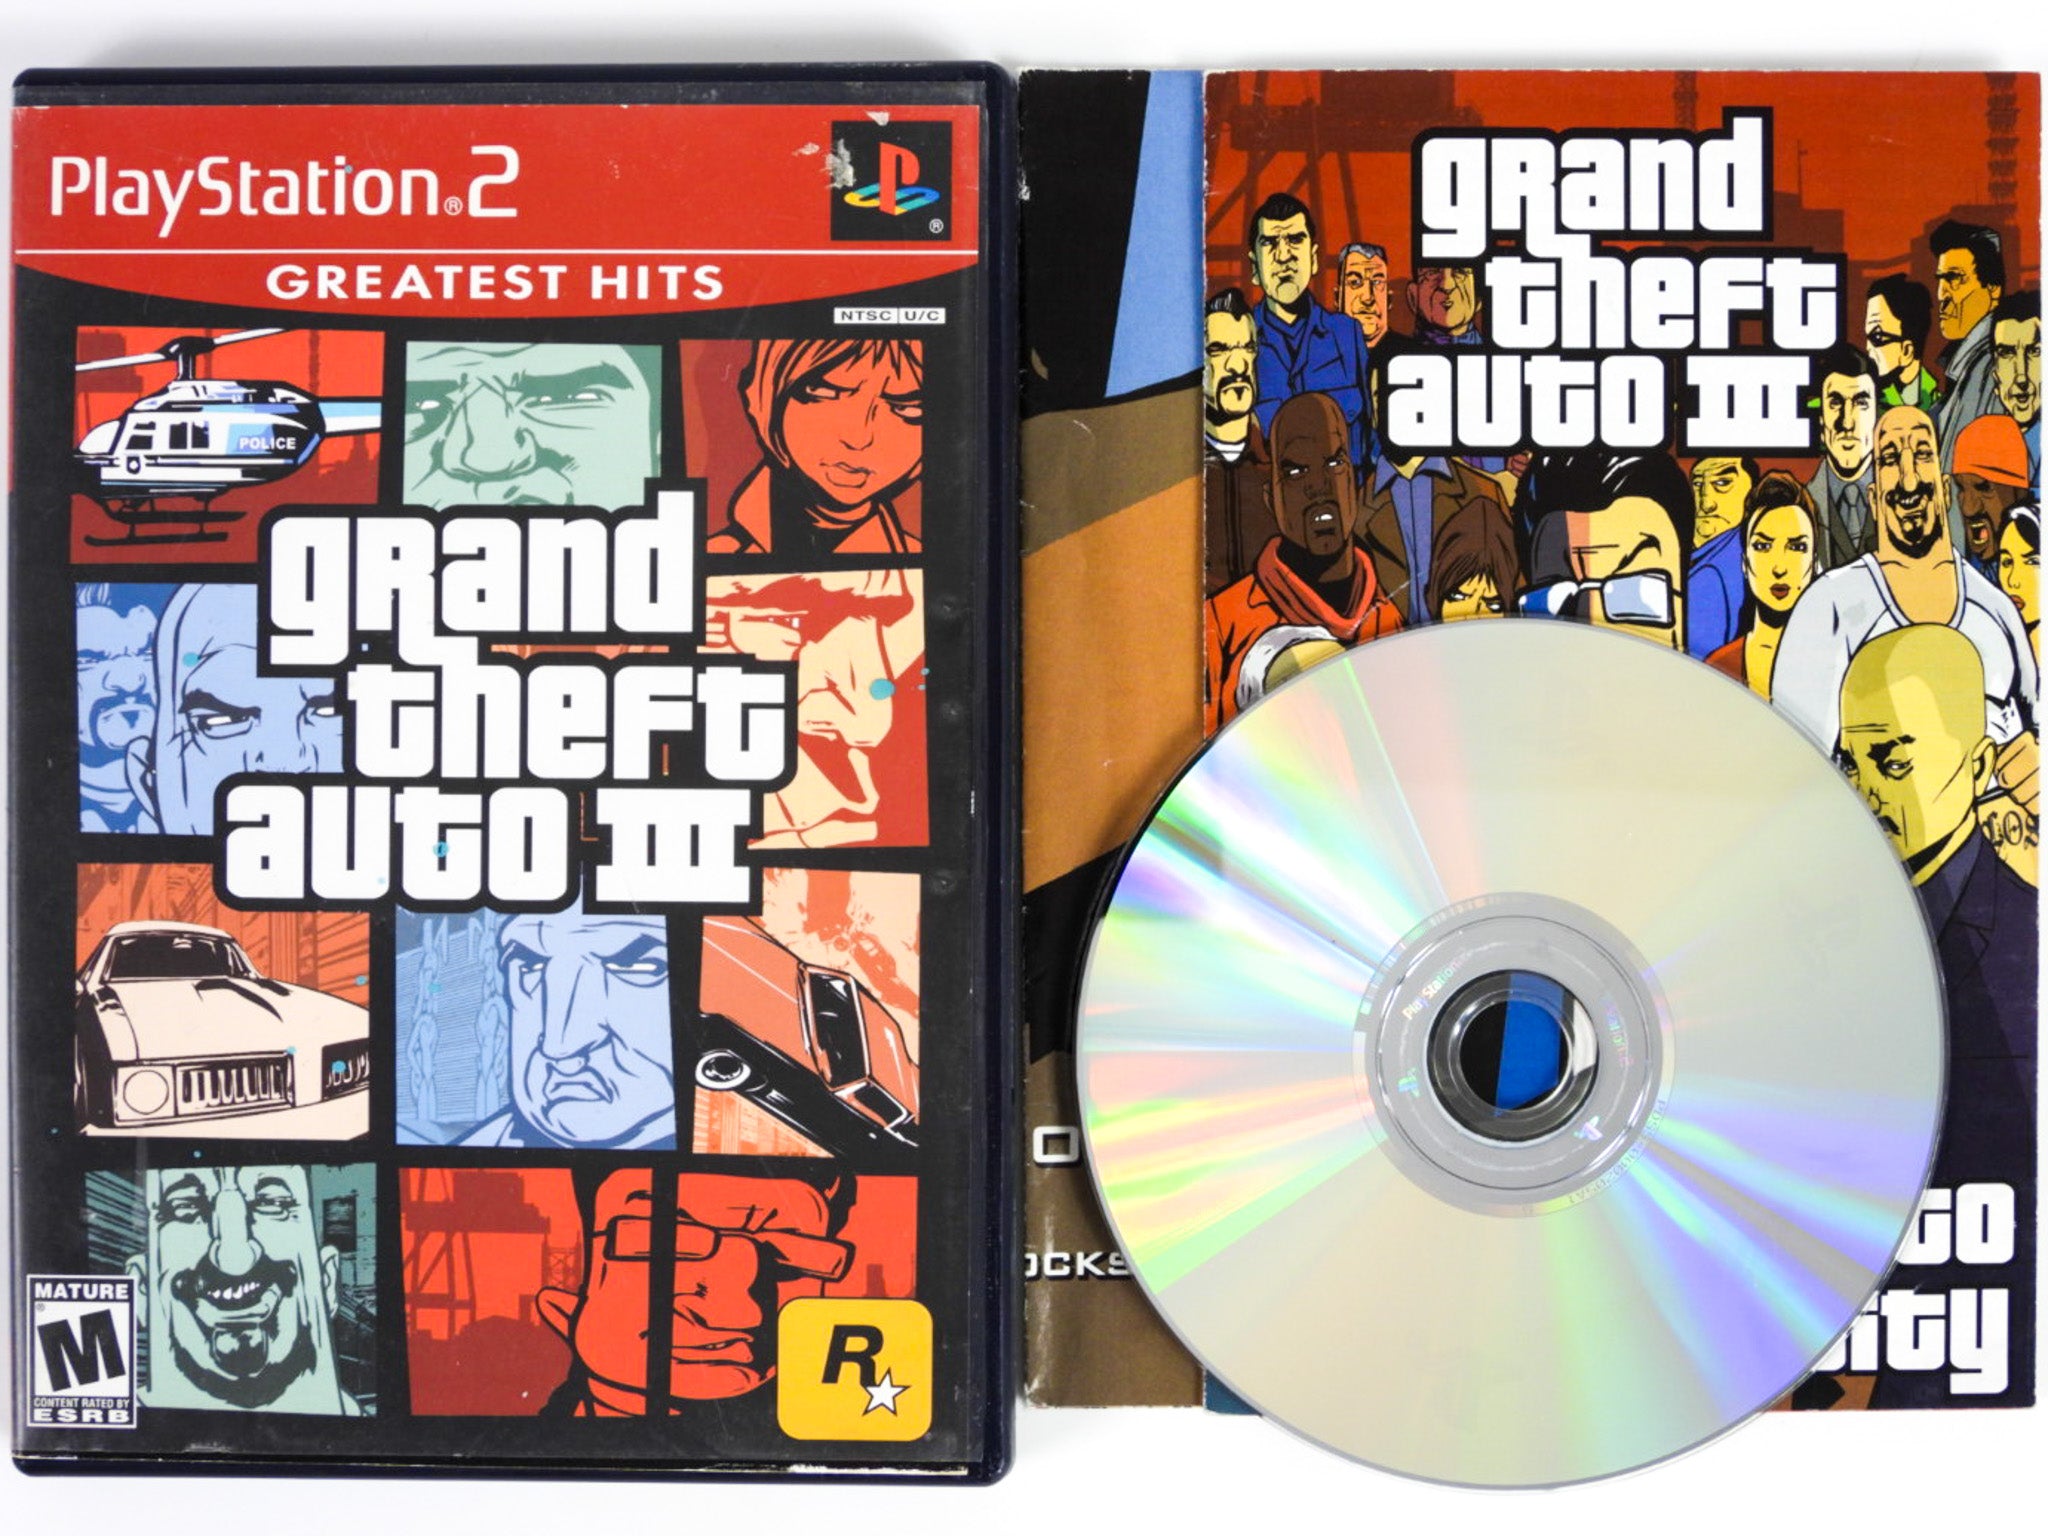 Grand Theft Auto III - PlayStation 2, PlayStation 2